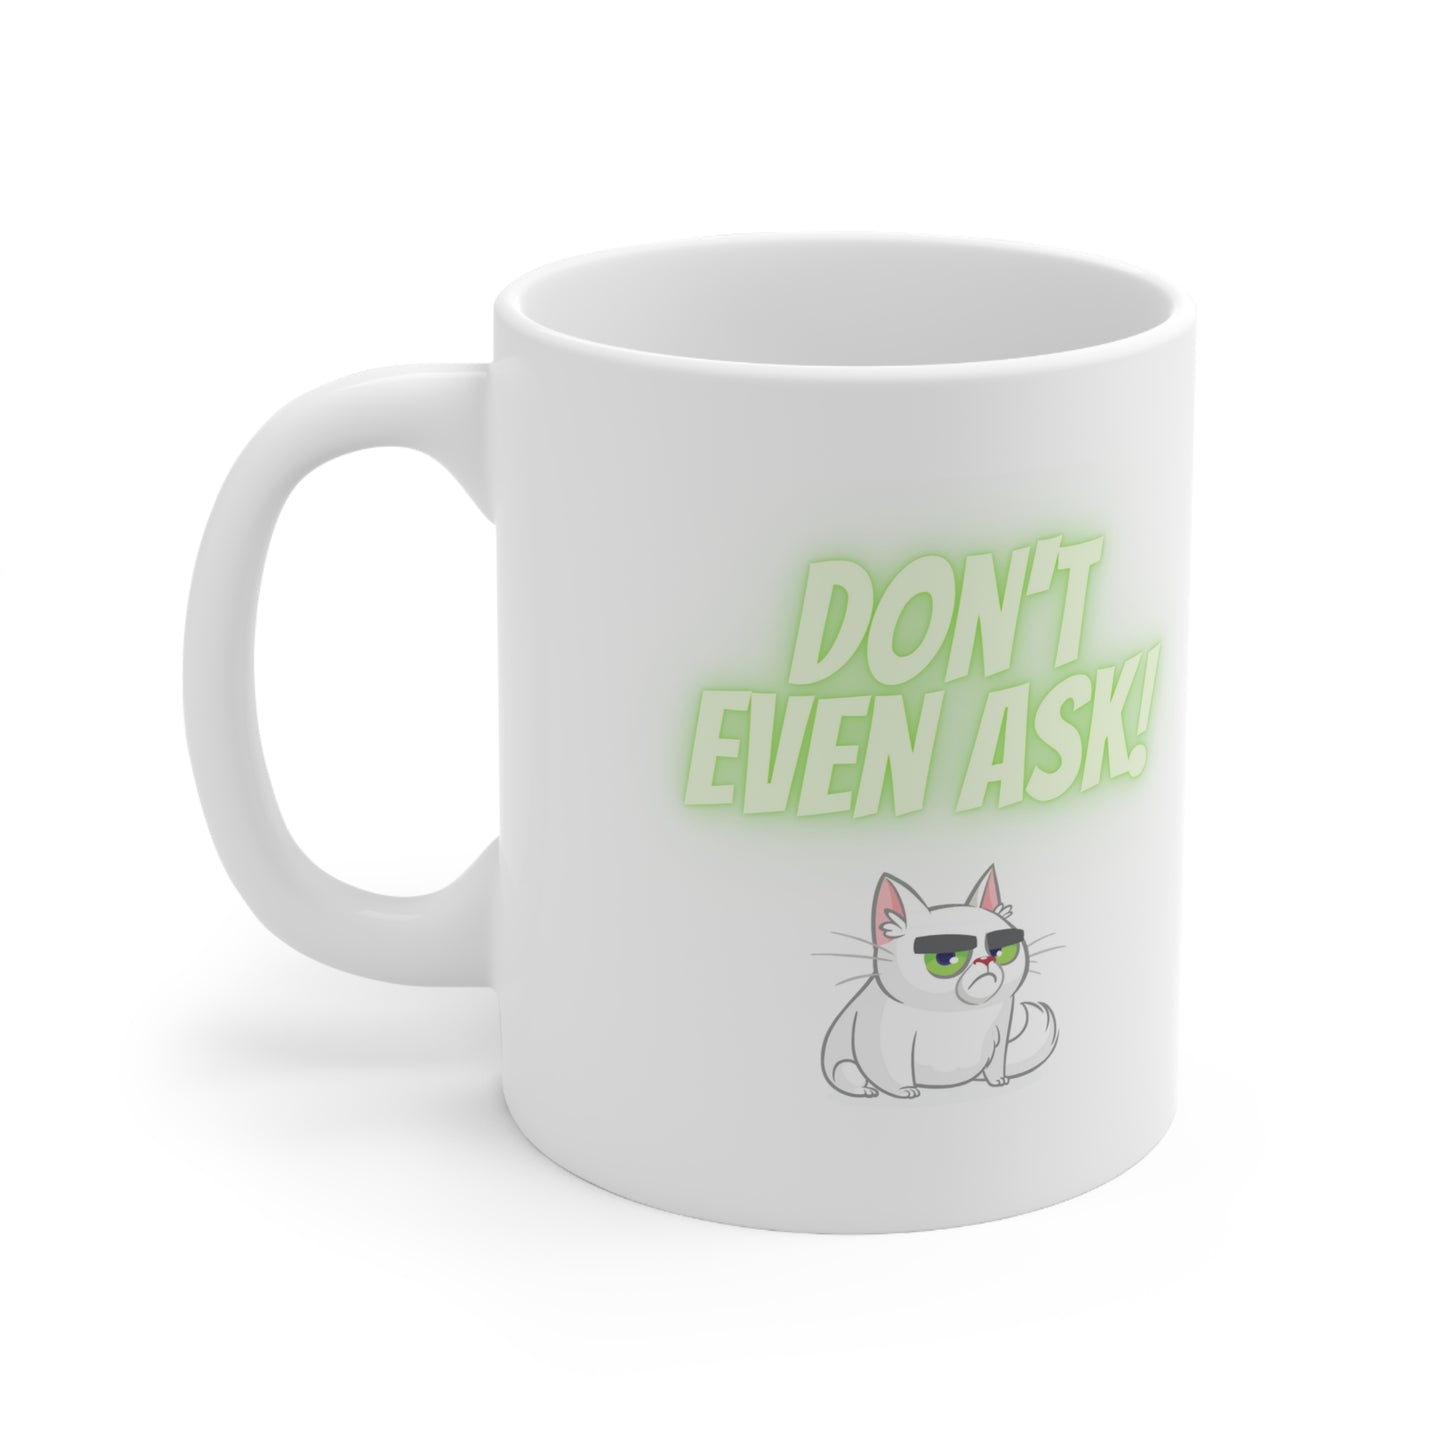 Don't Even Ask Cranky Cat Mug